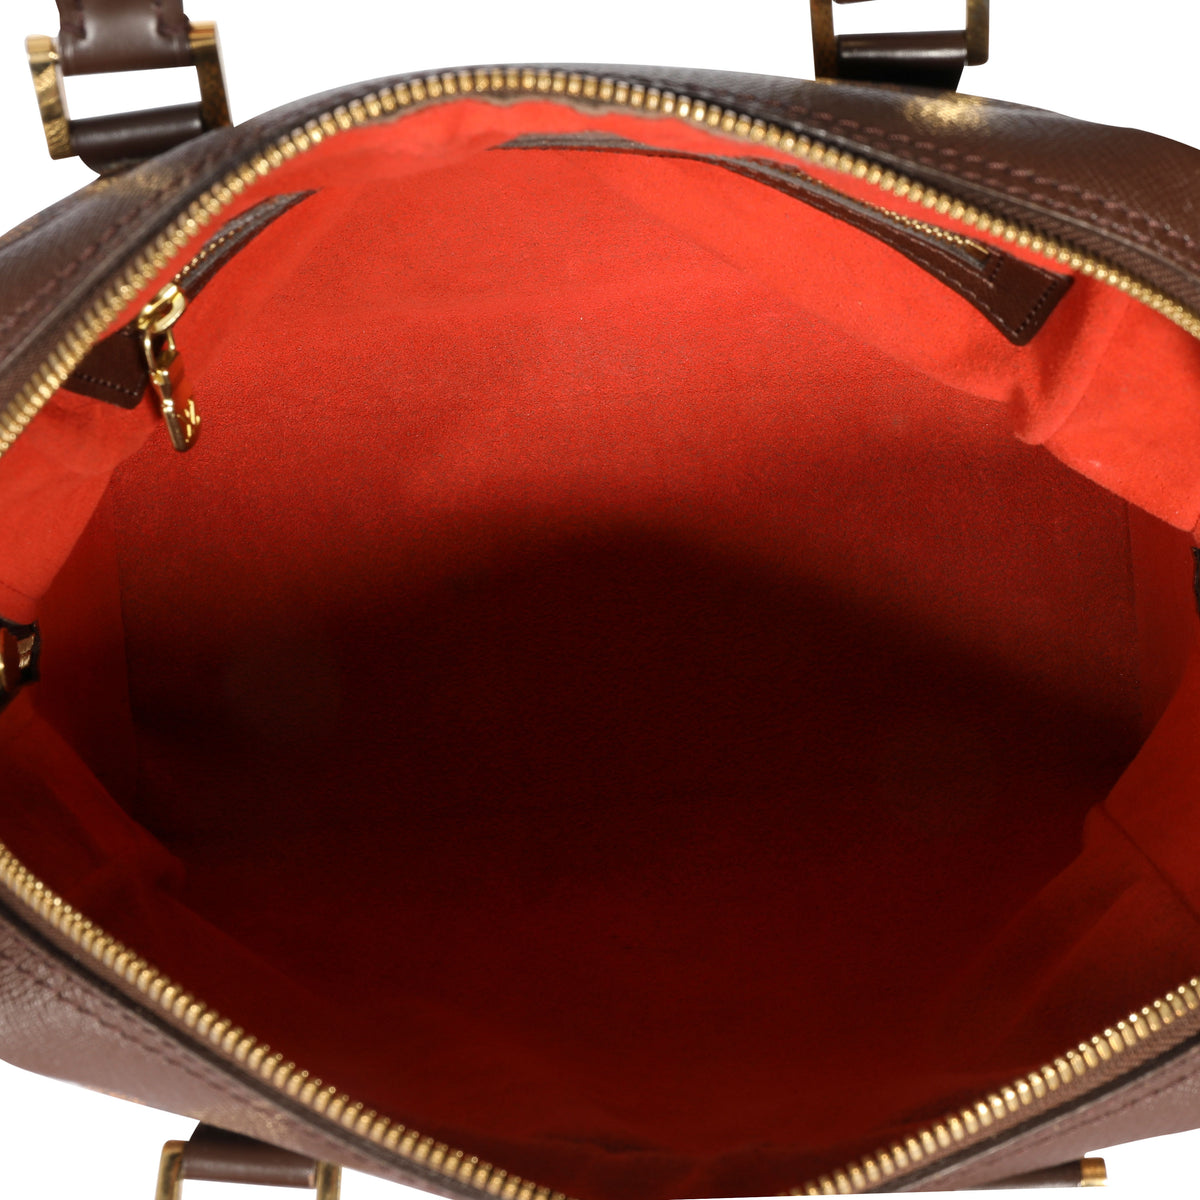 LOUIS VUITTON handbag Brera N51150 Square Damier Ladies